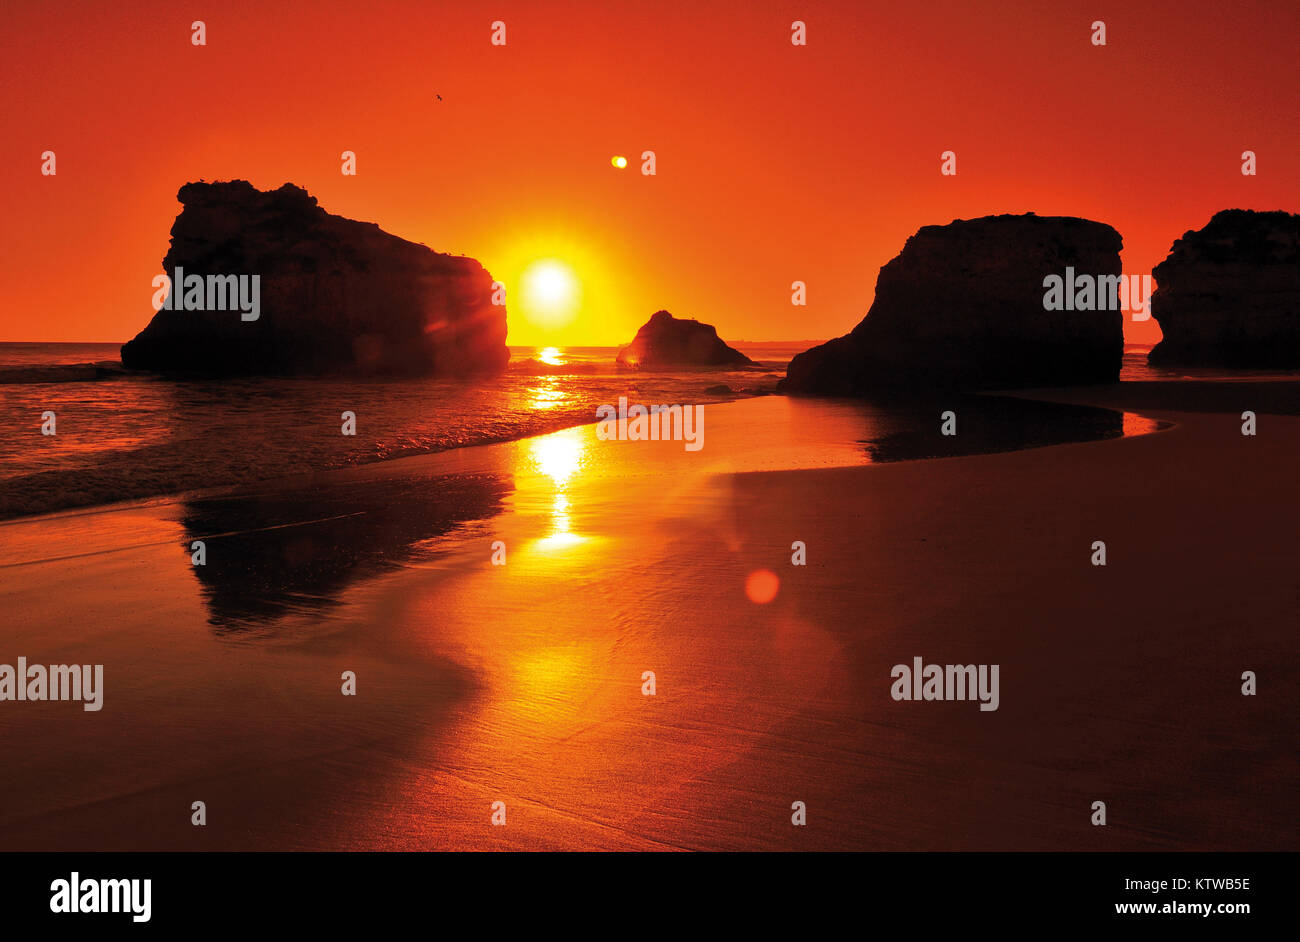 Scenic sundown en playa con horizonte naranja y siluetas de rock Foto de stock